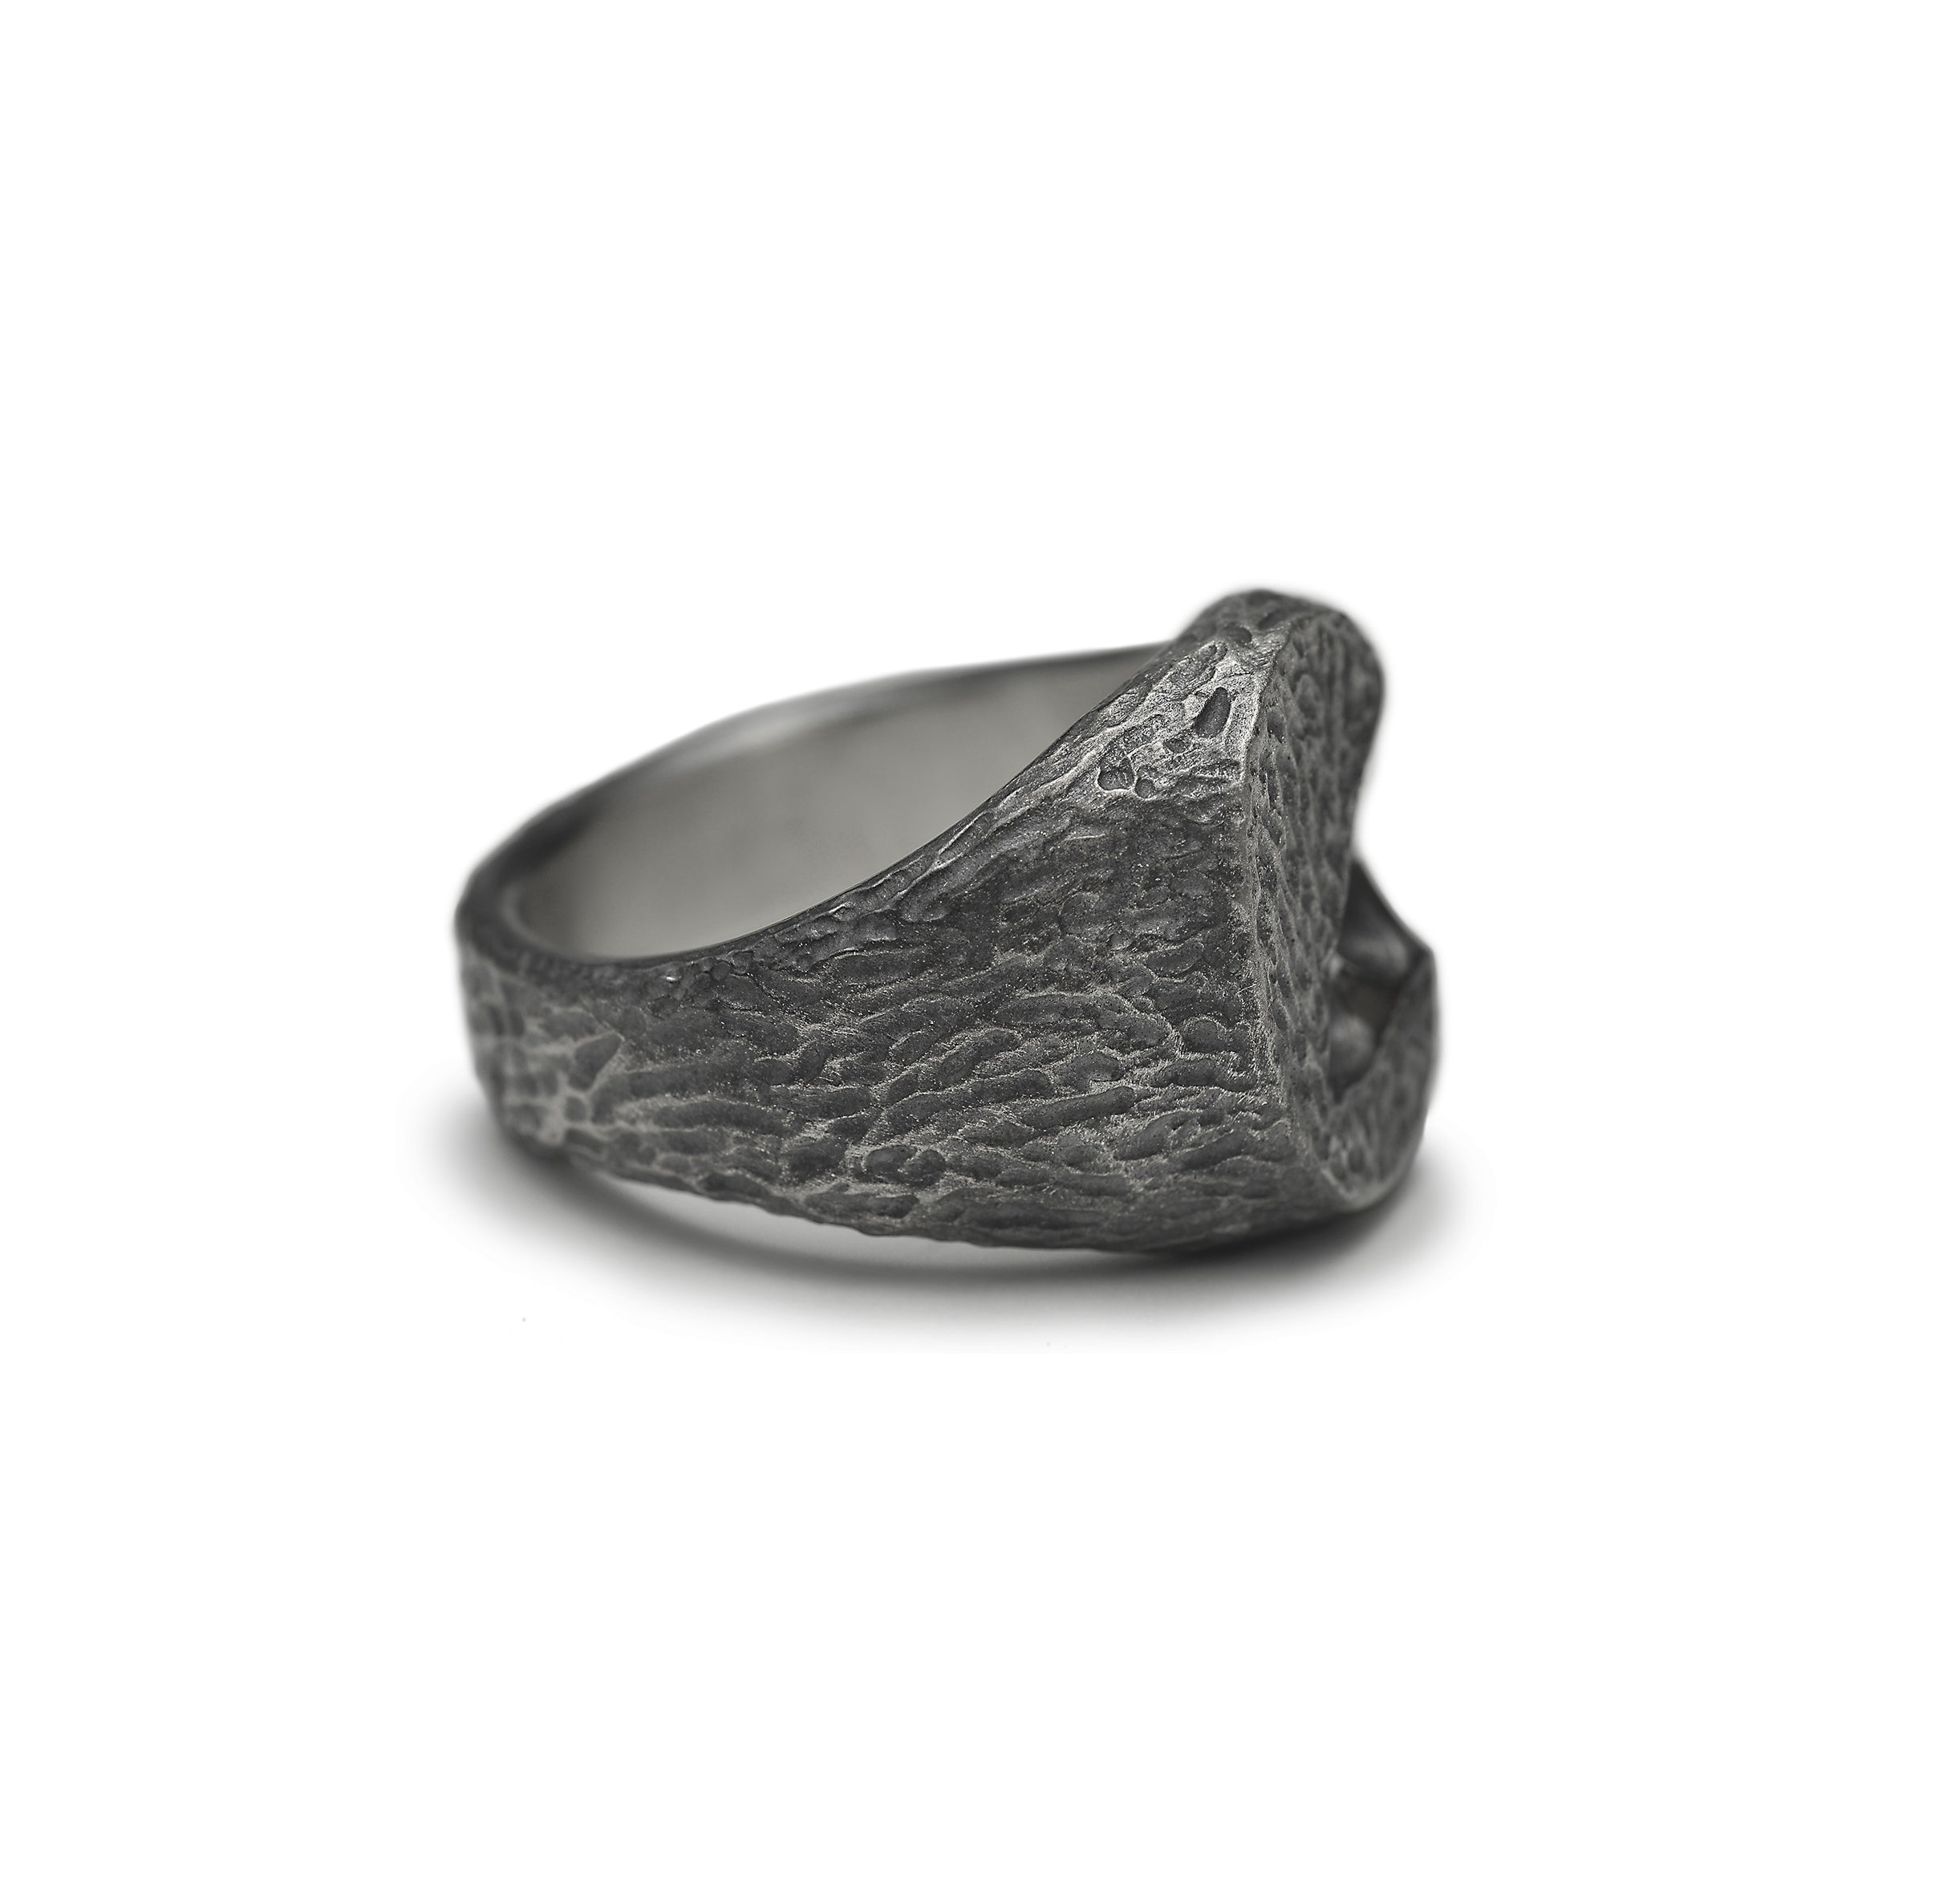 Eternal - oval sterling silver signet ring